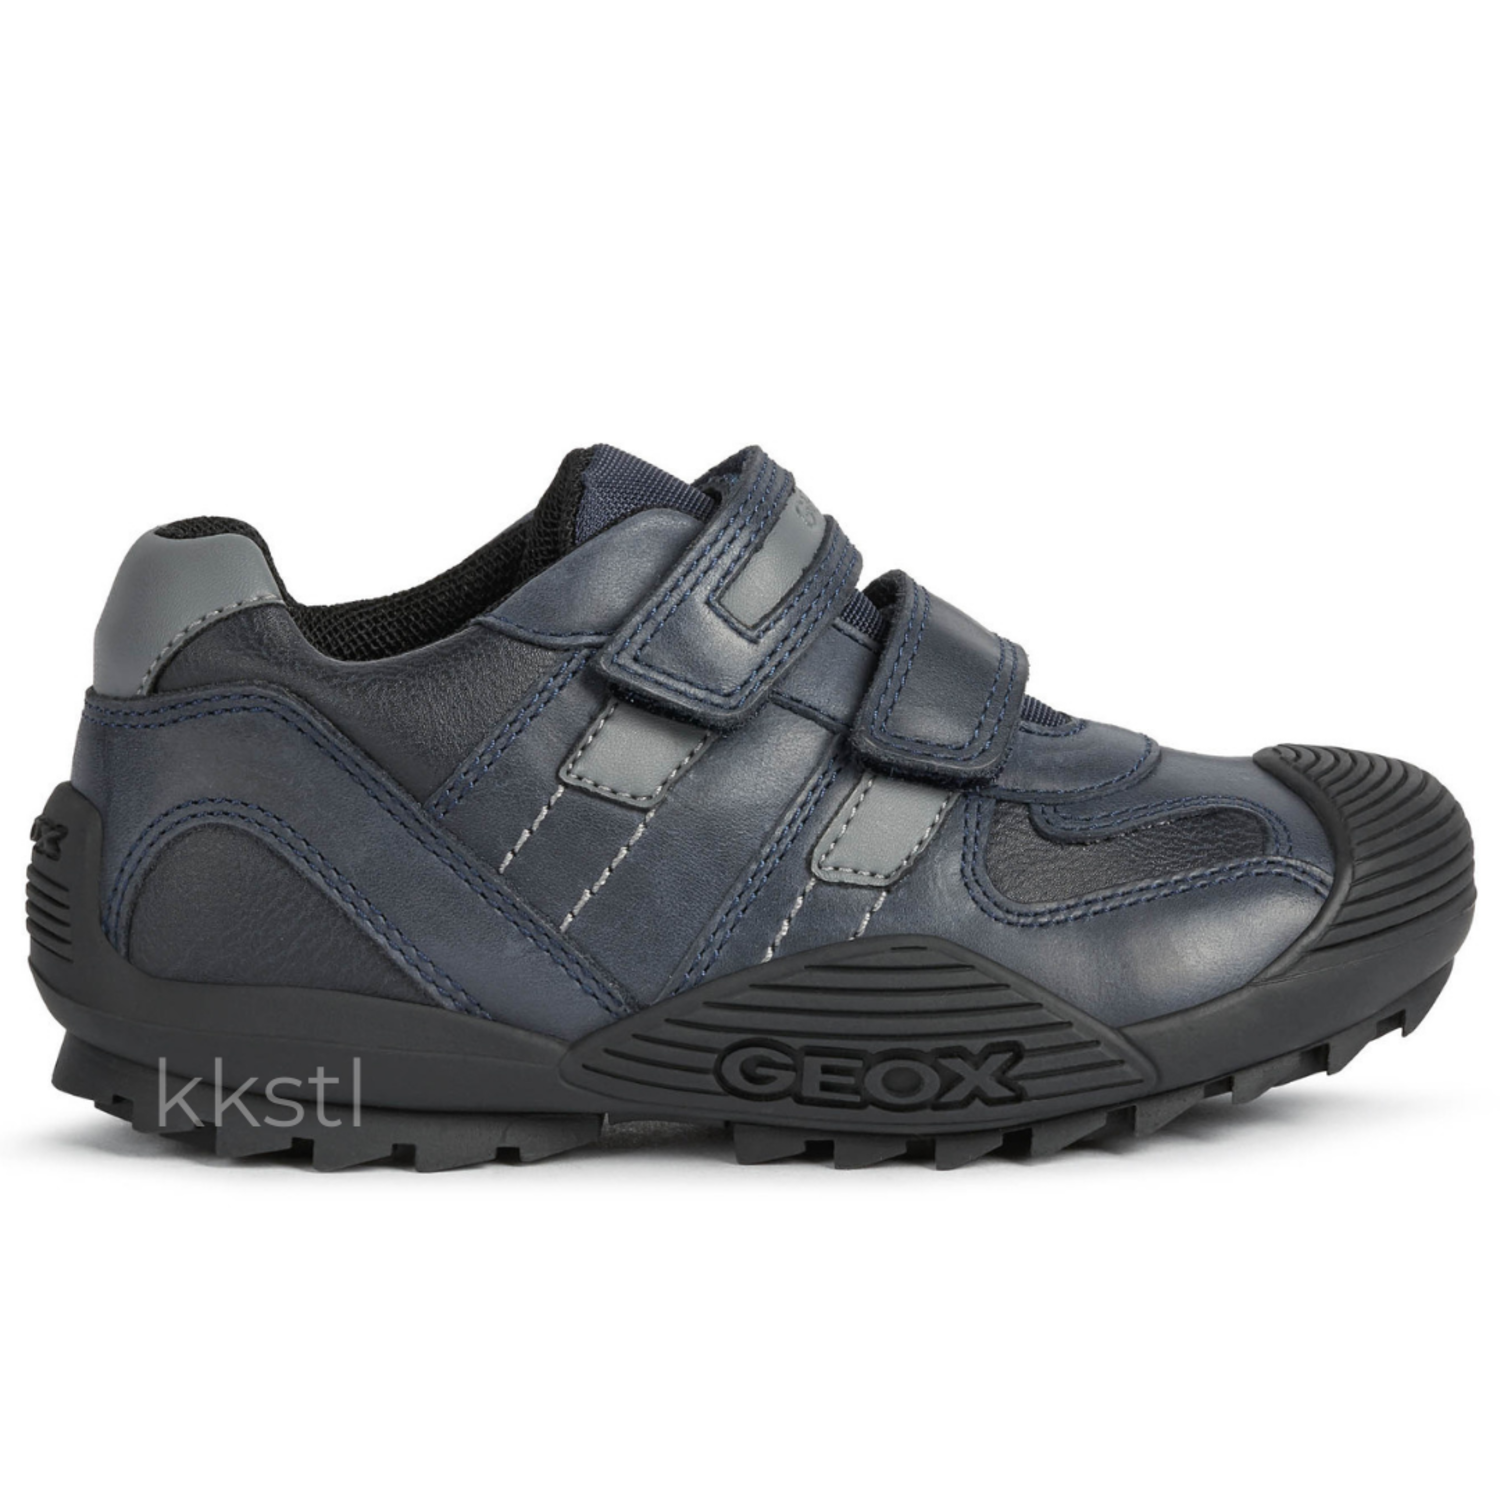 Geox J Navy/Grey - Kids Shoes in Canada - Kiddie Kobbler St Laurent